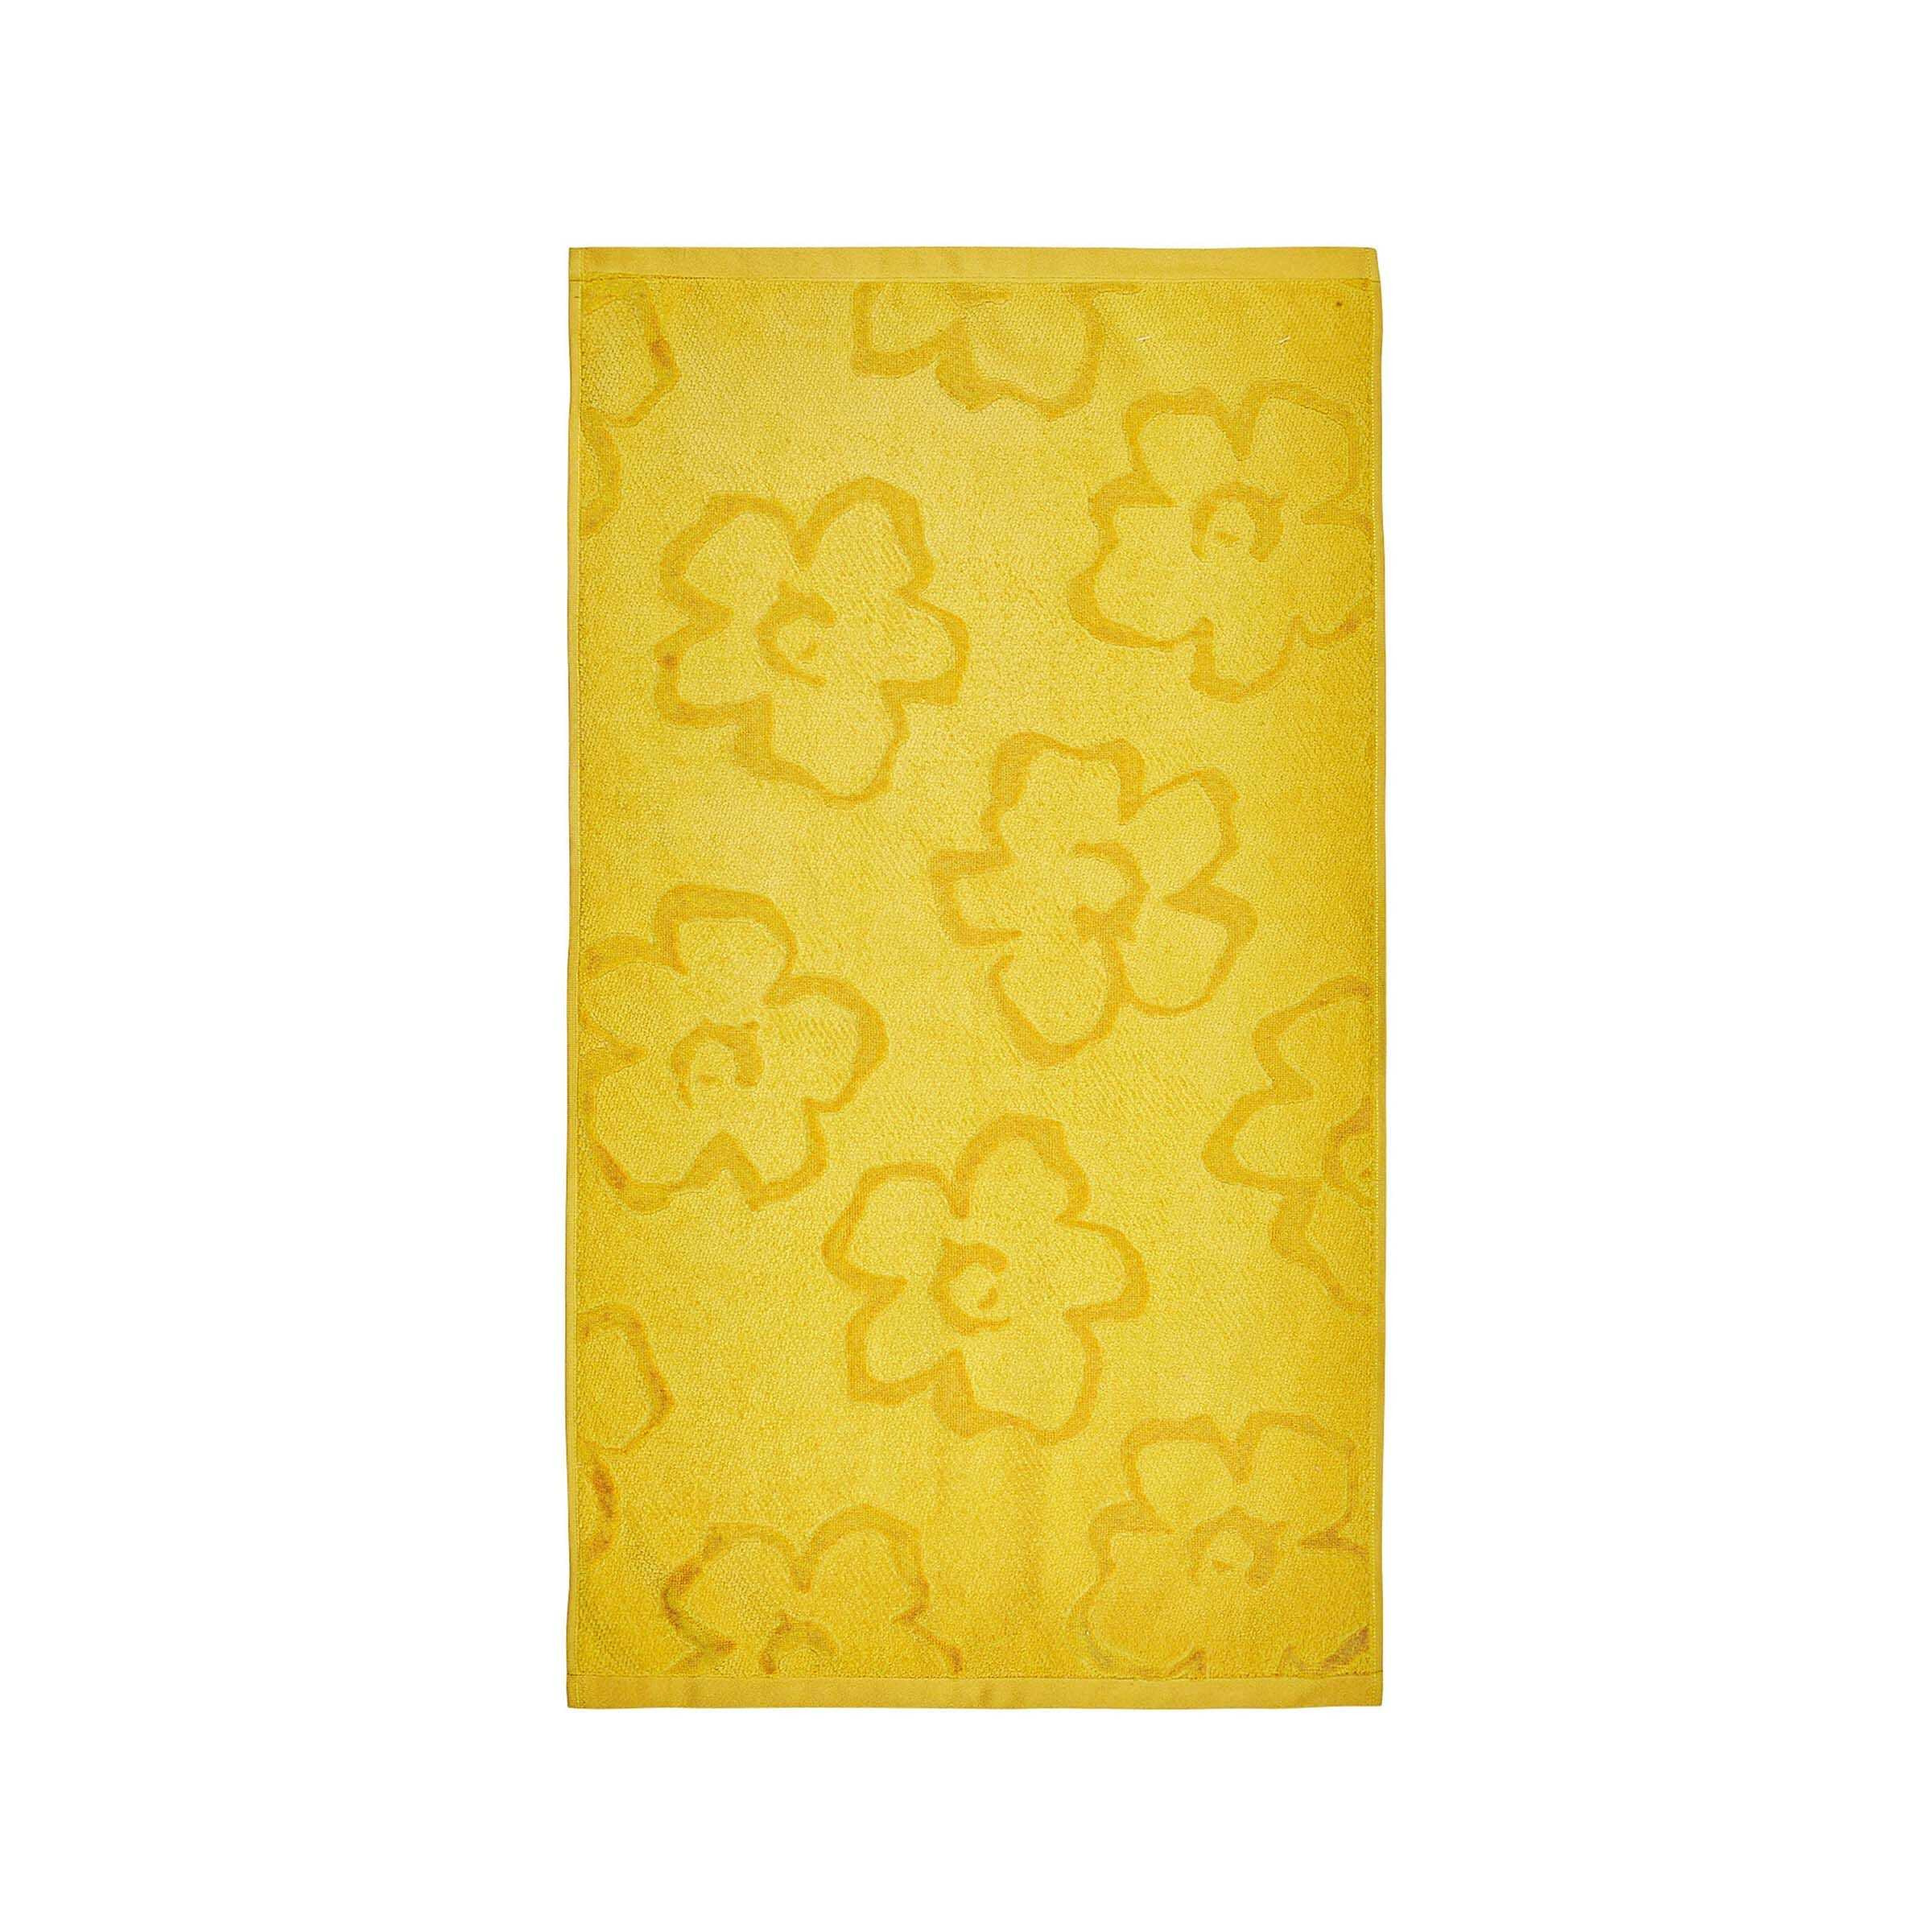 Ted Baker Magnolia Hand Towel, Gold - image 1